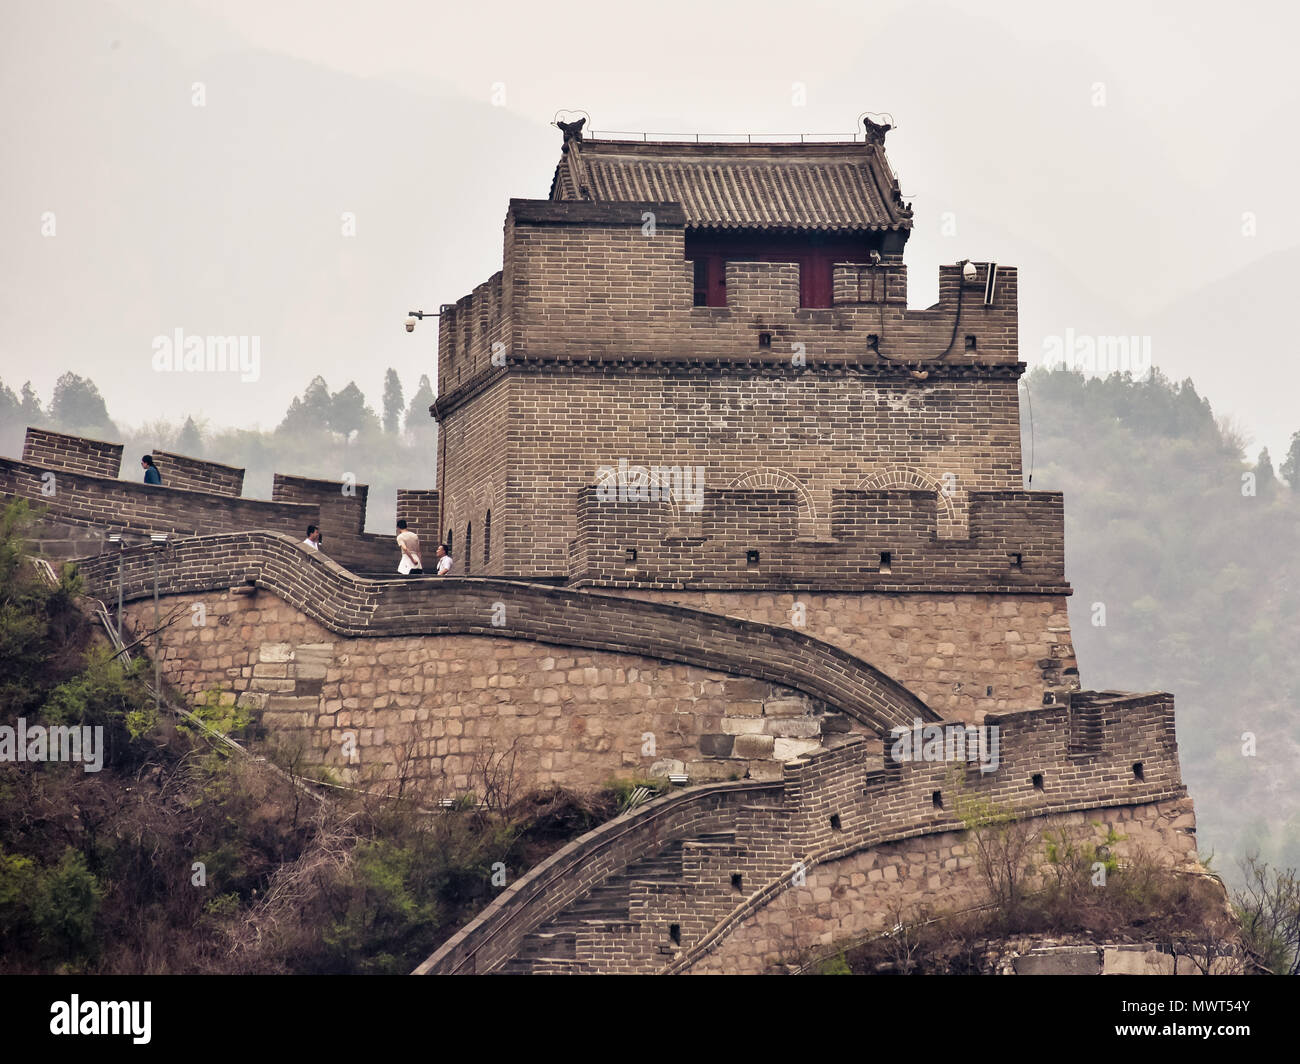 Badaling, Beijing/China - Apr. 19, 2018: A watchtower in the Great Wall of China in Juyongguan Pass, Badaling, China. Stock Photo